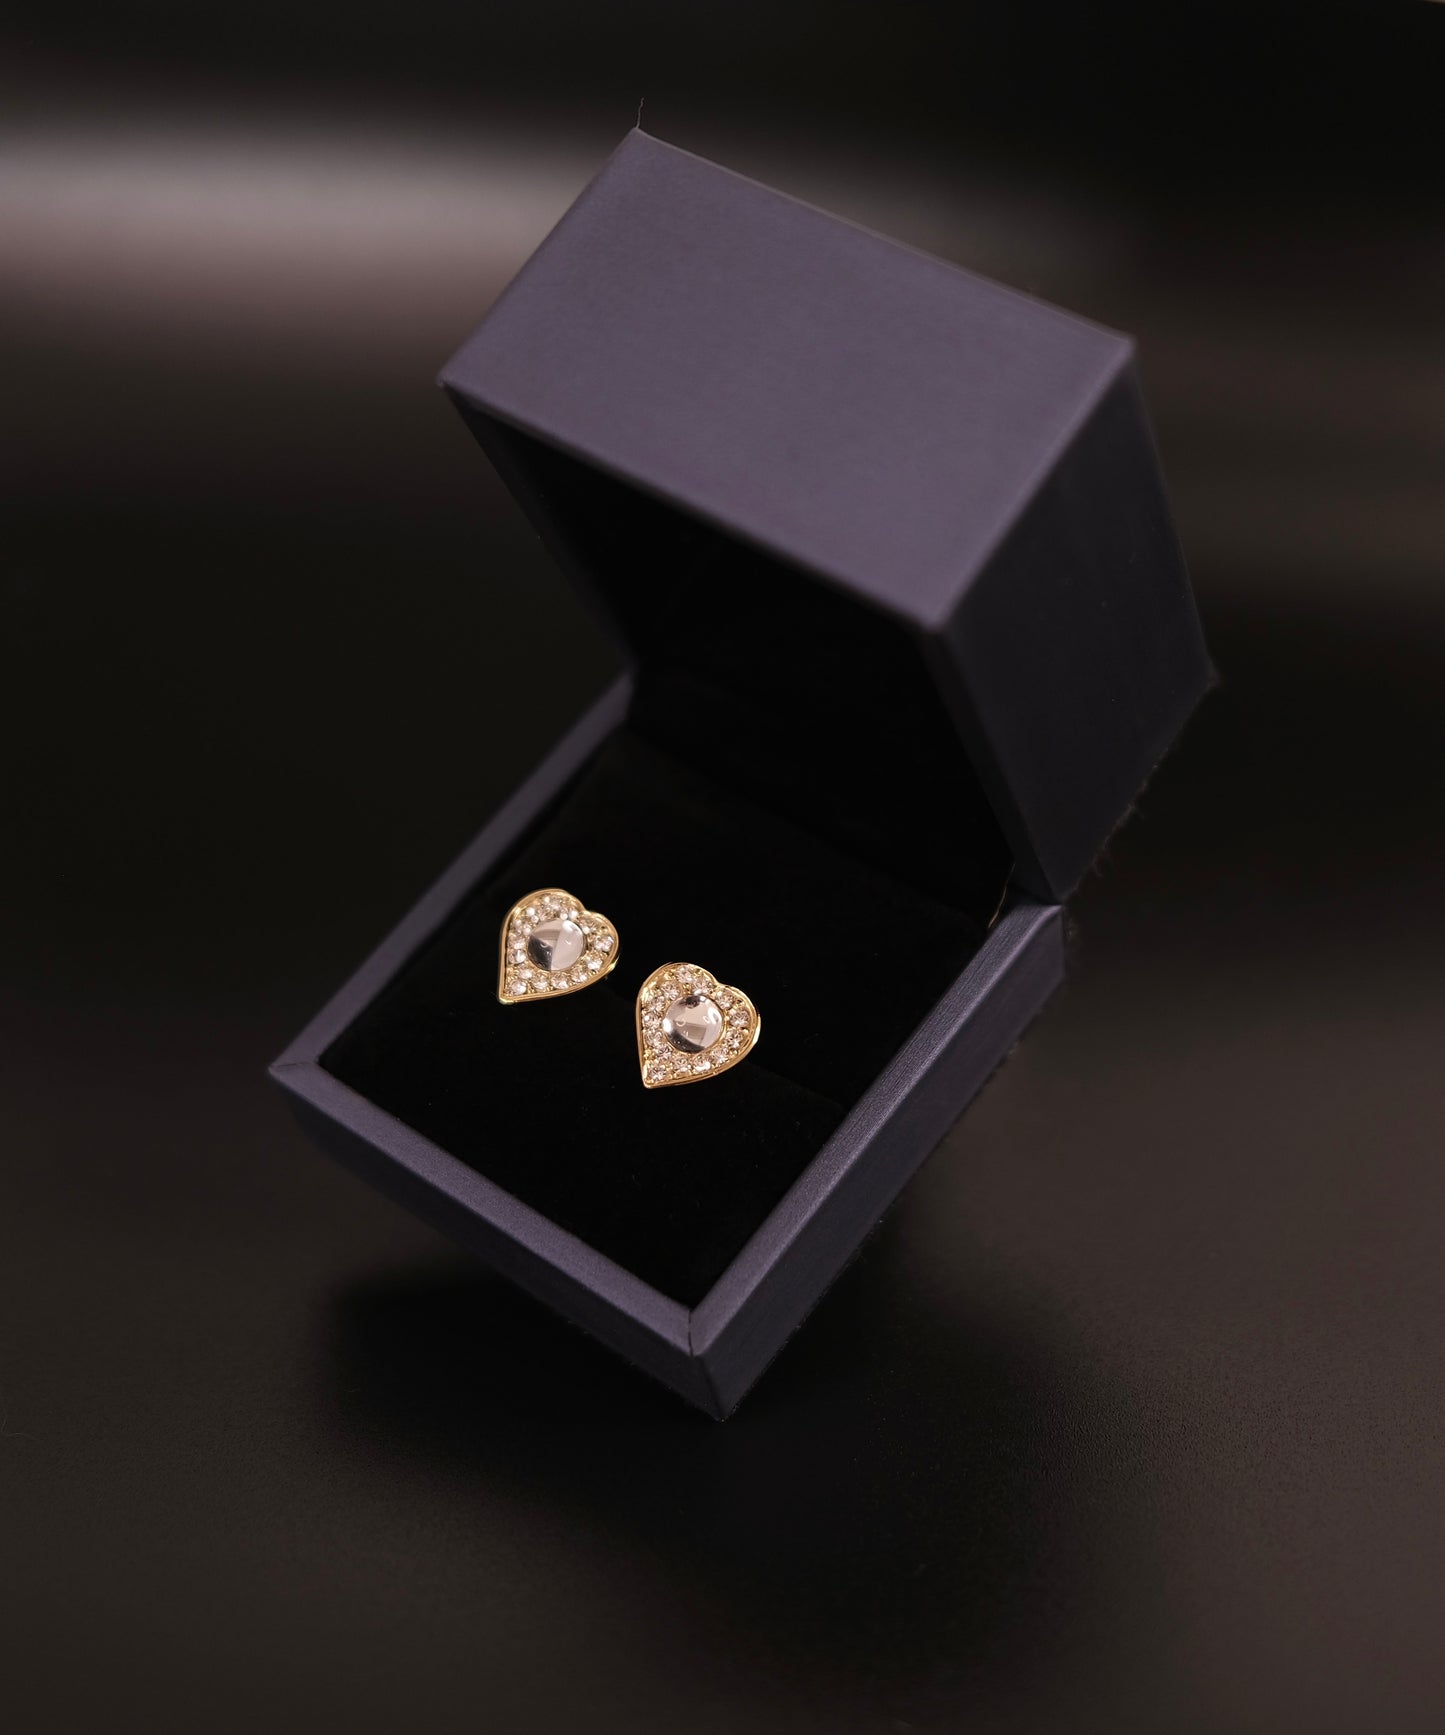 New Heart Gold Stud Earrings Cabochon Sterling Silver 925 Base 2Mc 24K Gorgeous Swarovski Crystal